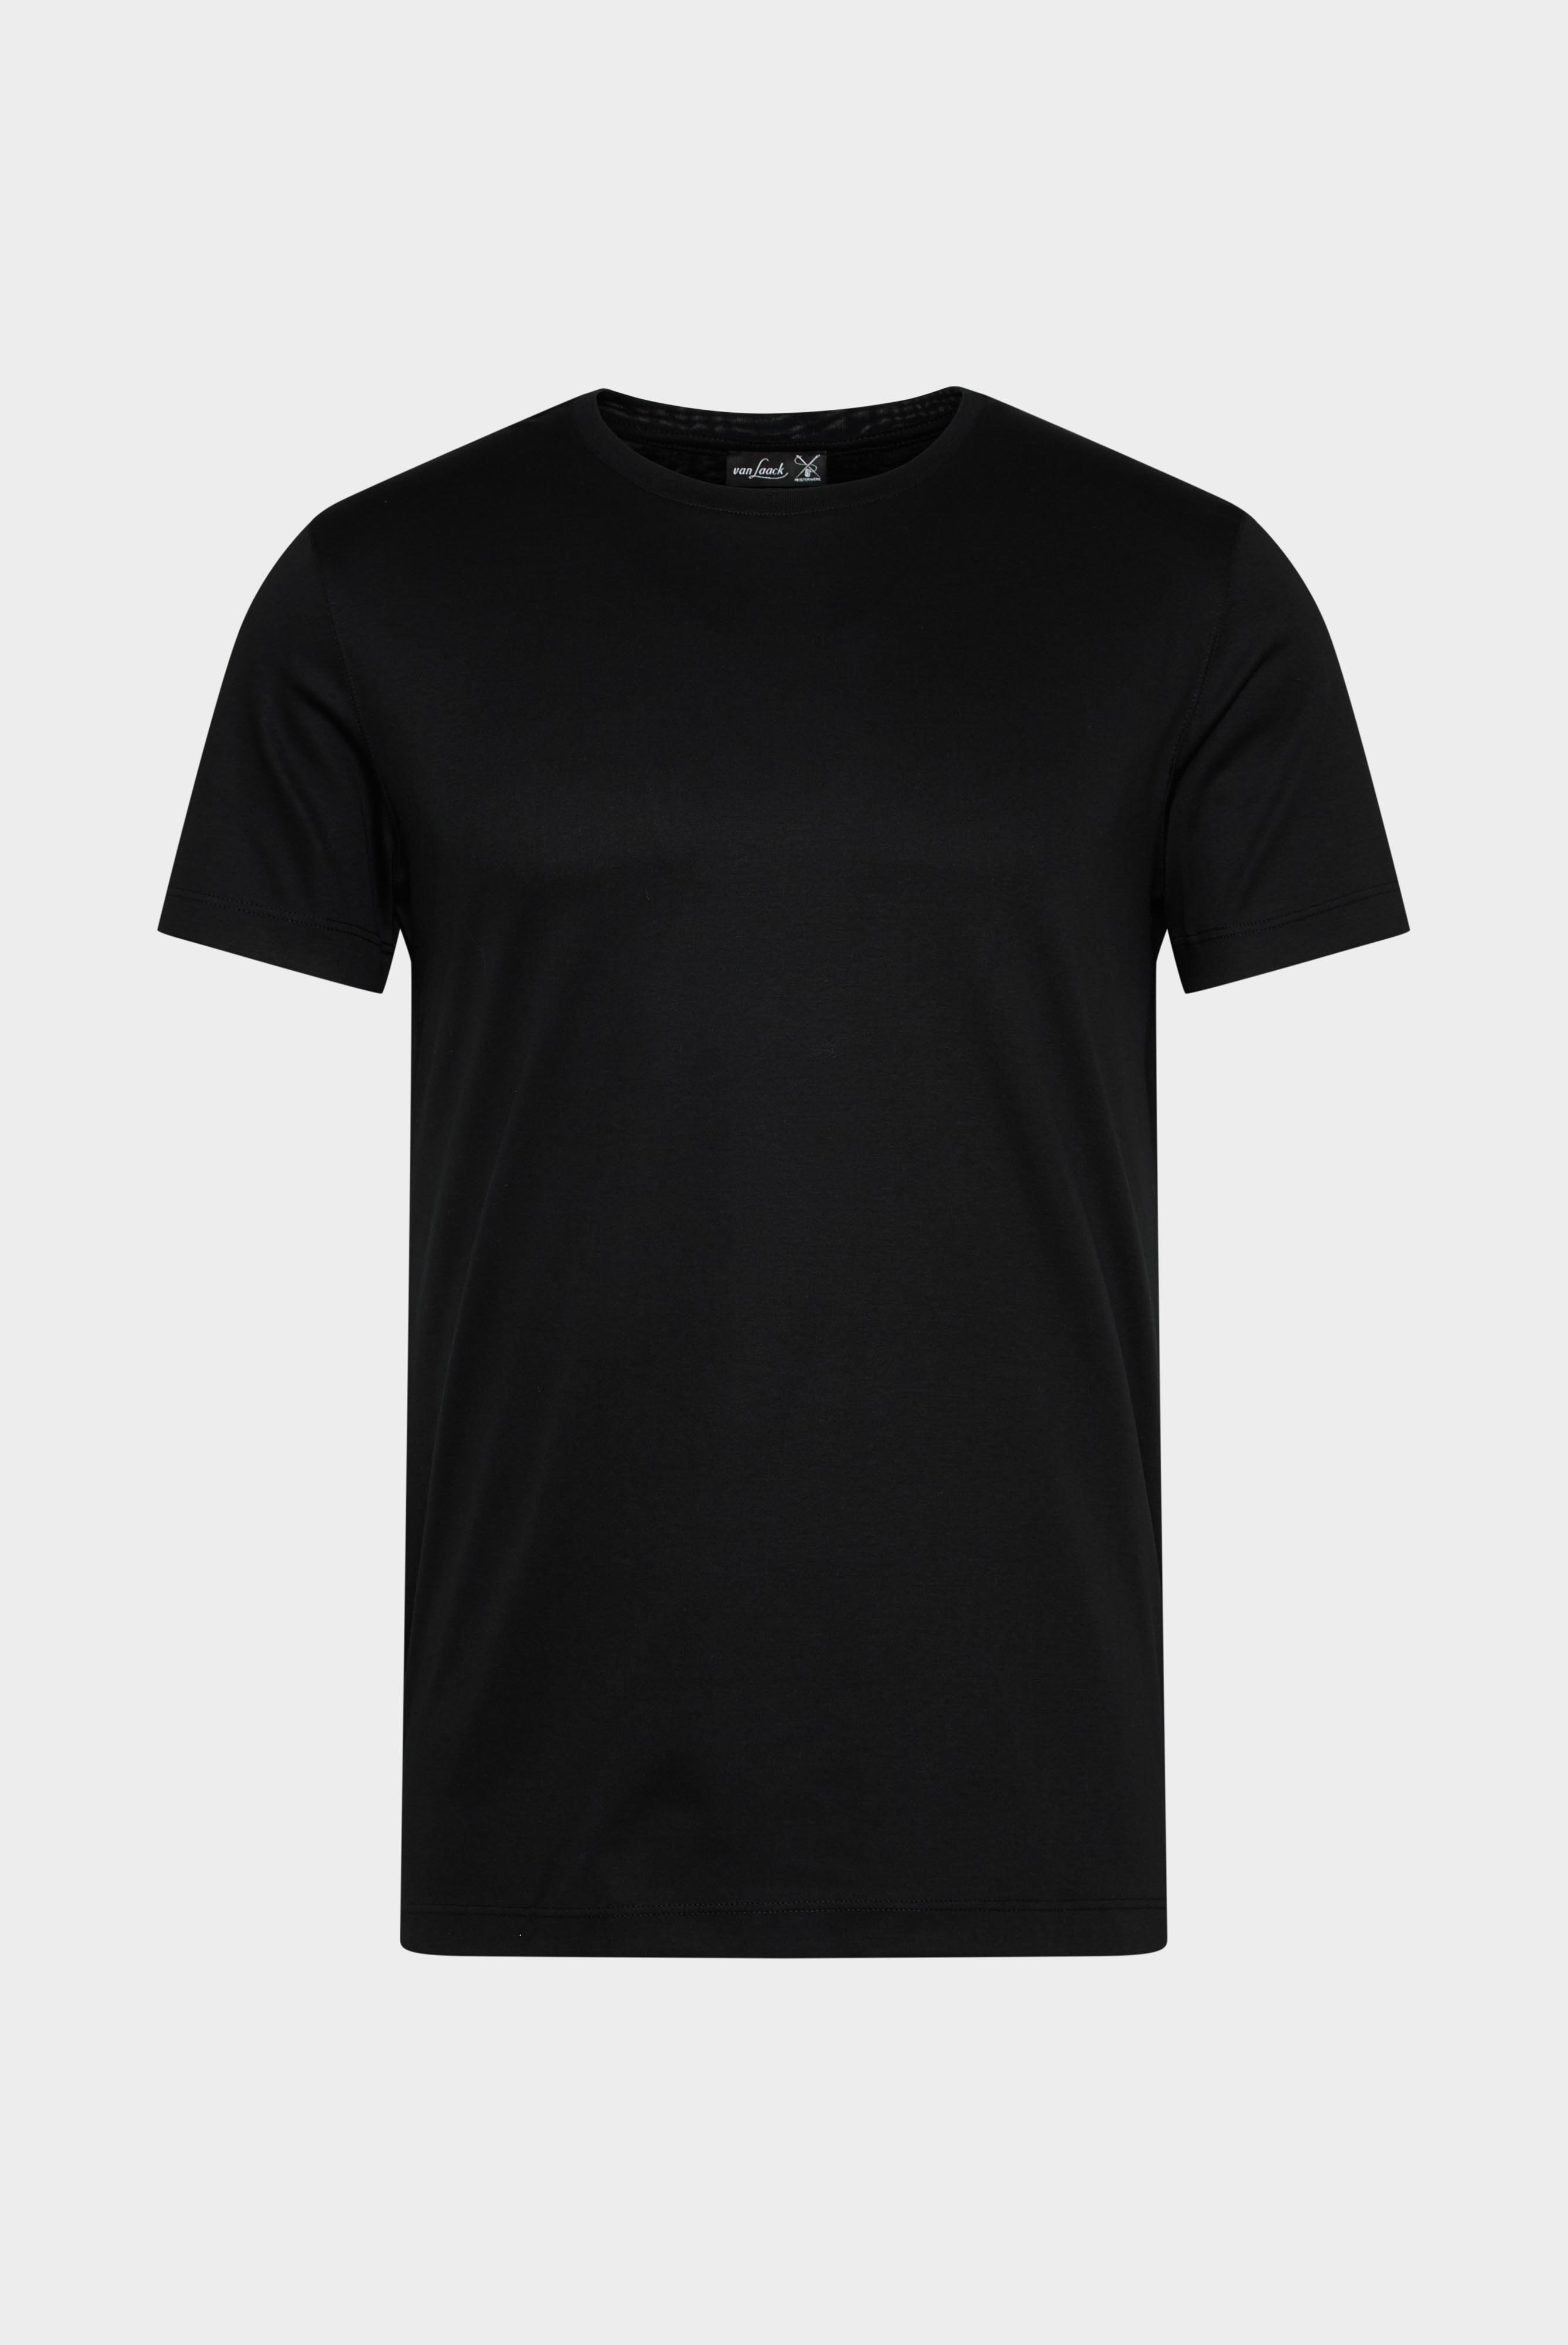 T-Shirts+Rundhals Jersey T-Shirt Slim Fit+20.1717.UX.180031.099.XXL